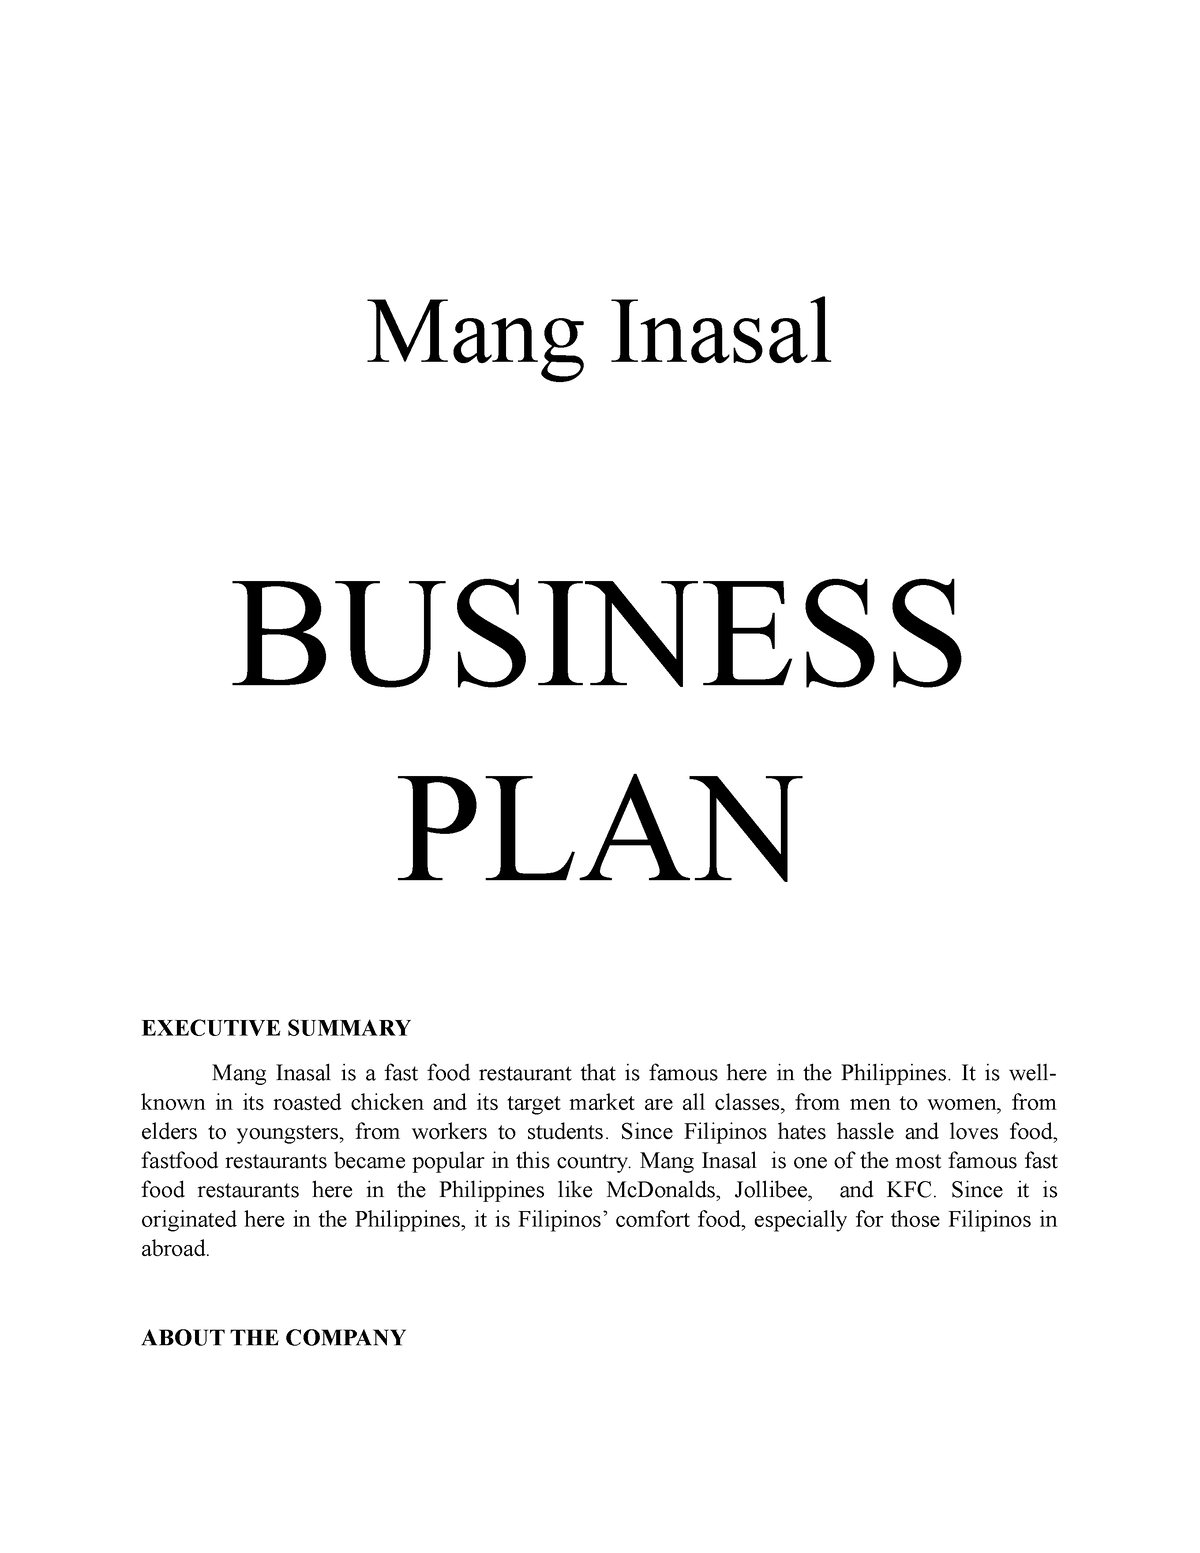 mang inasal franchise business plan